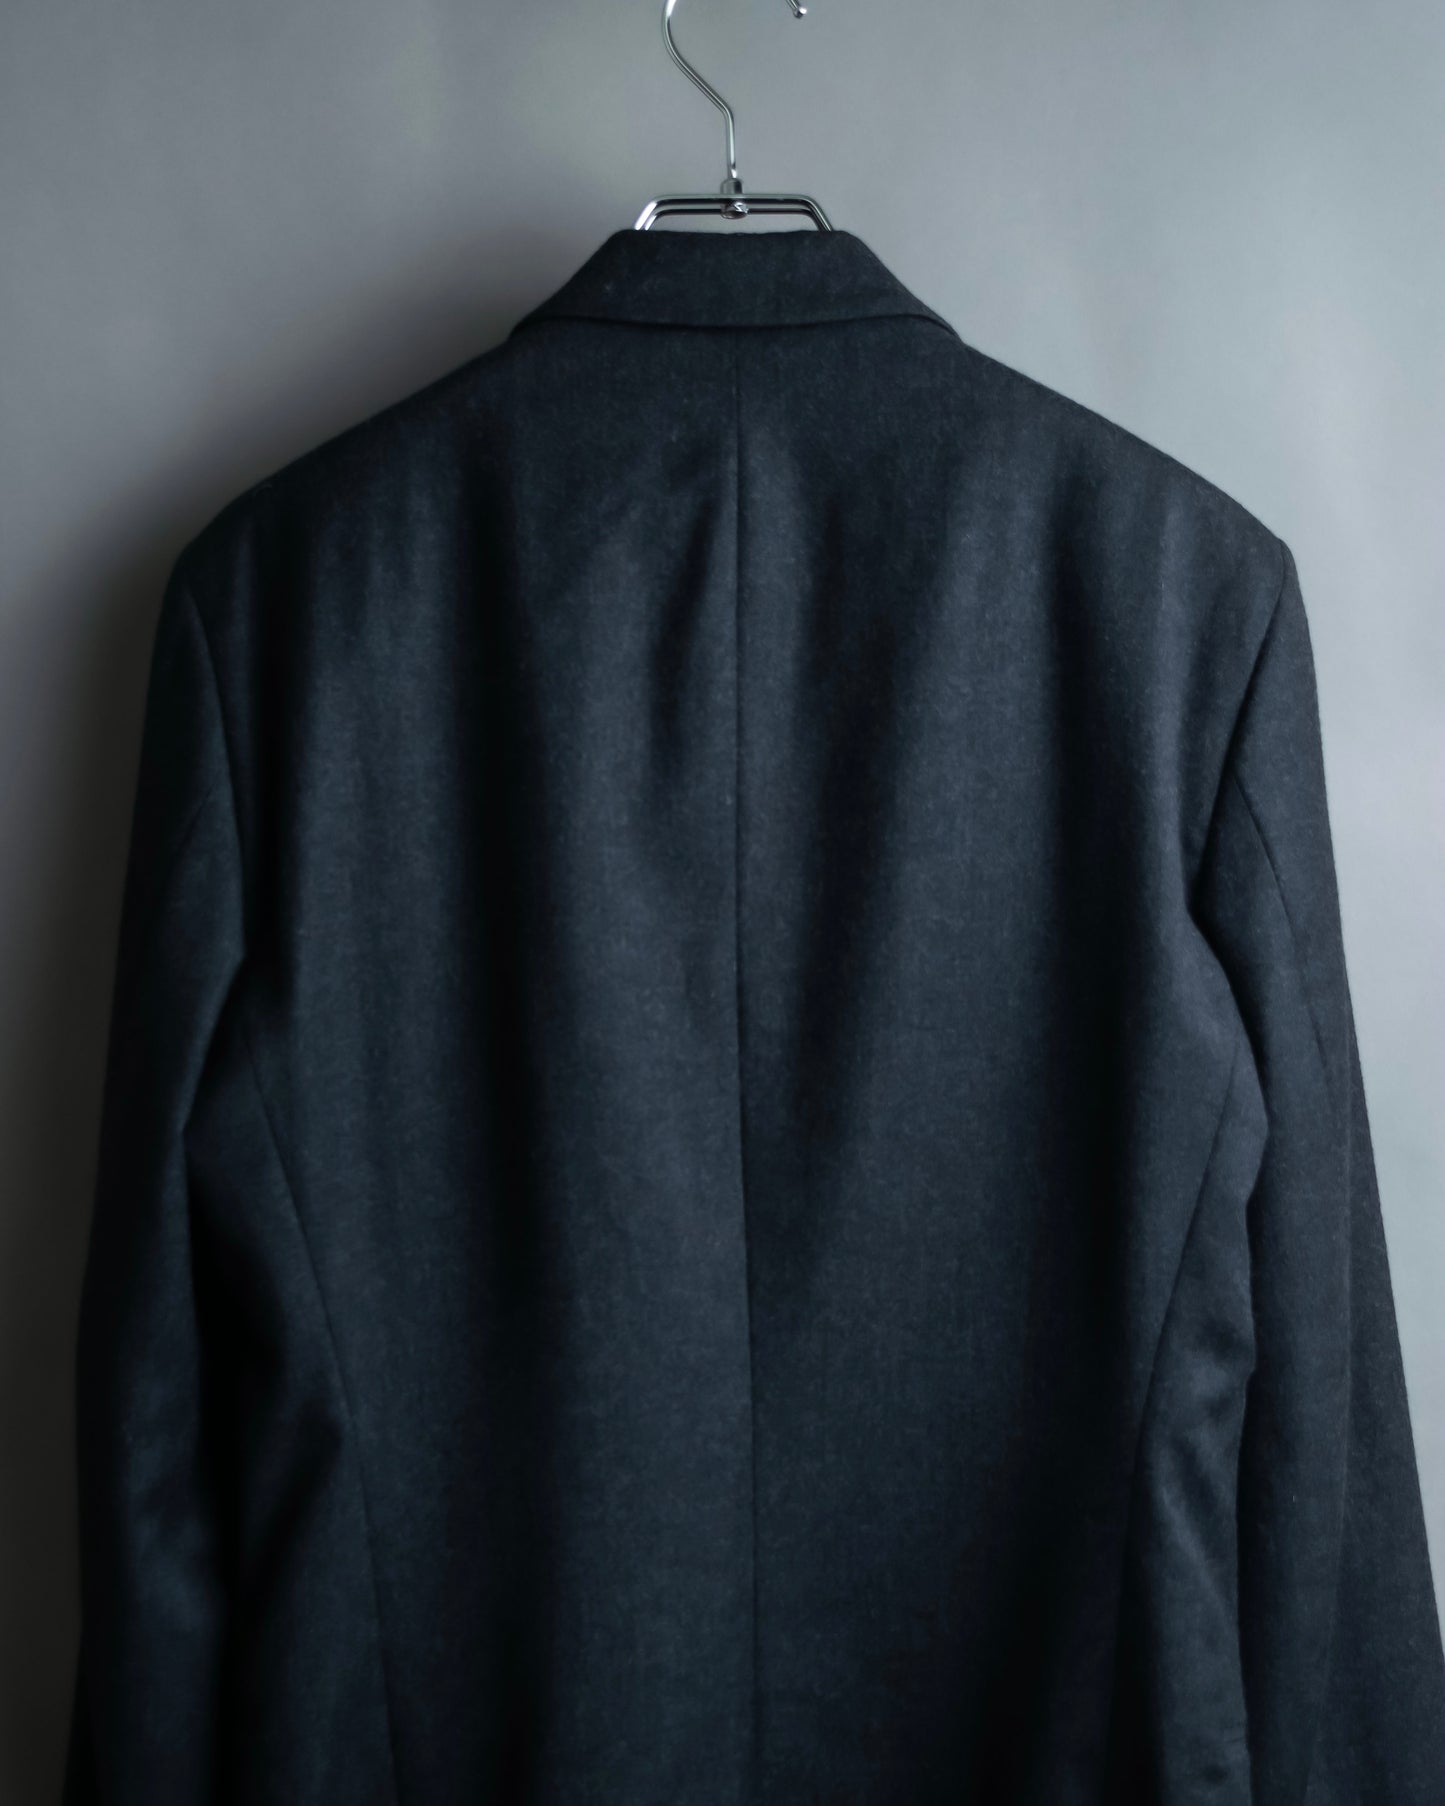 “Emporio Armani” beautiful designed 4B tailored jacket